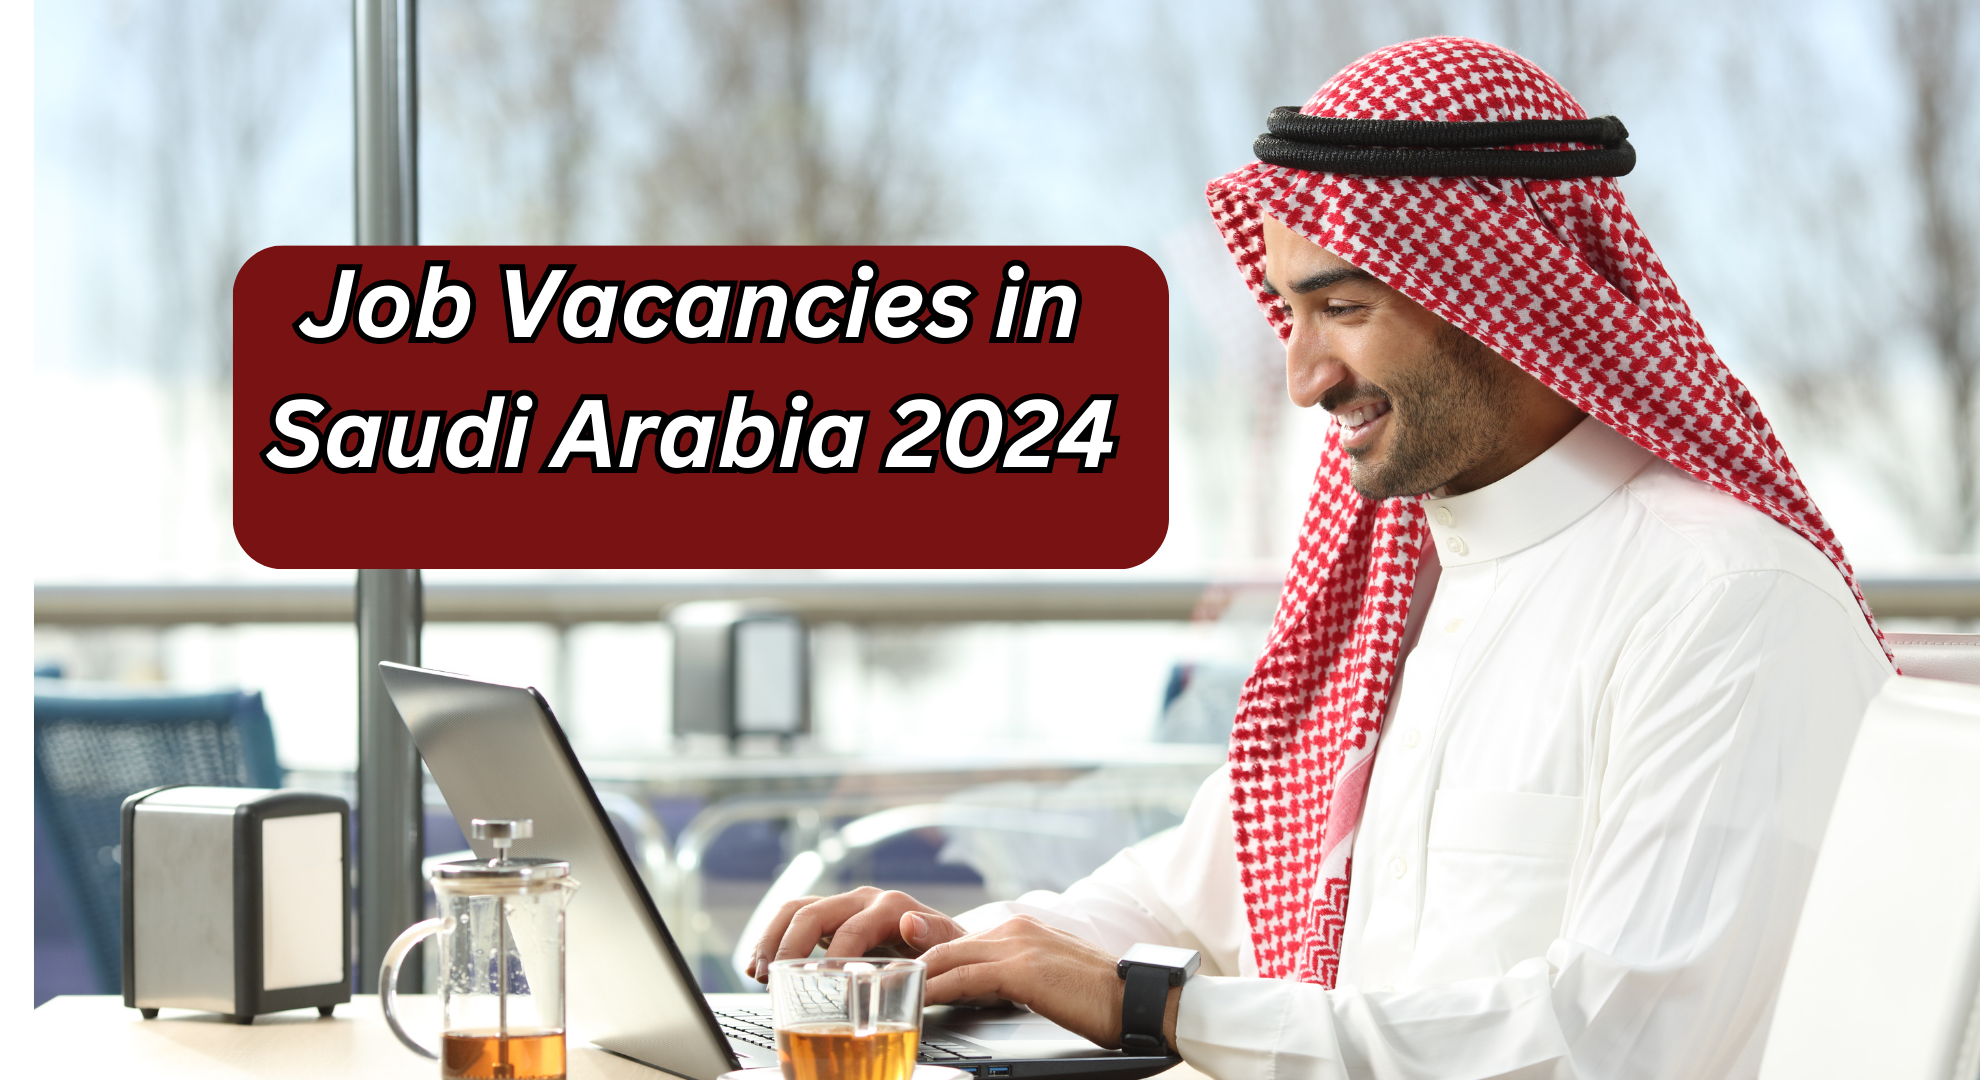 Job Vacancies in Saudi Arabia 2024